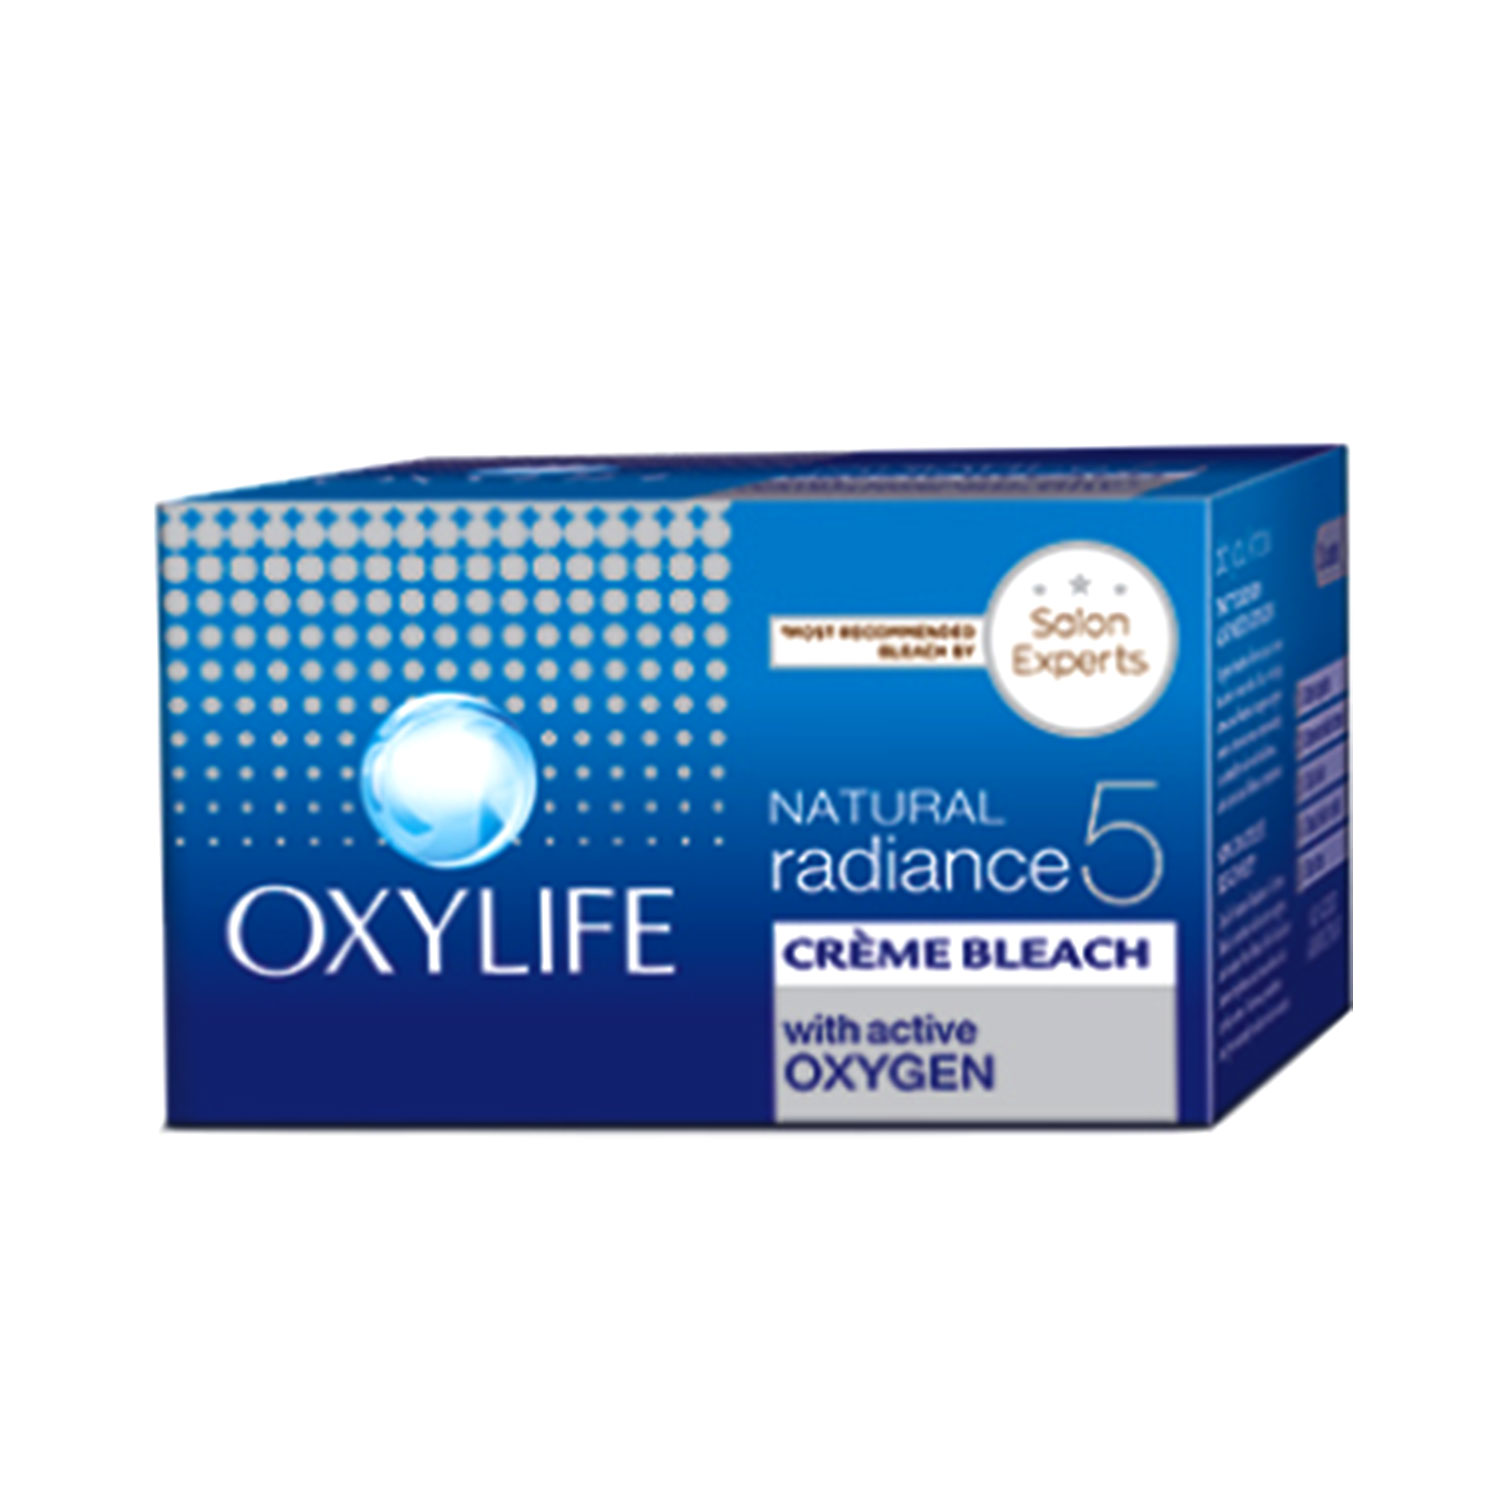 Oxy Life - Natural Radiance 5 Crème Bleach - 310 Gr